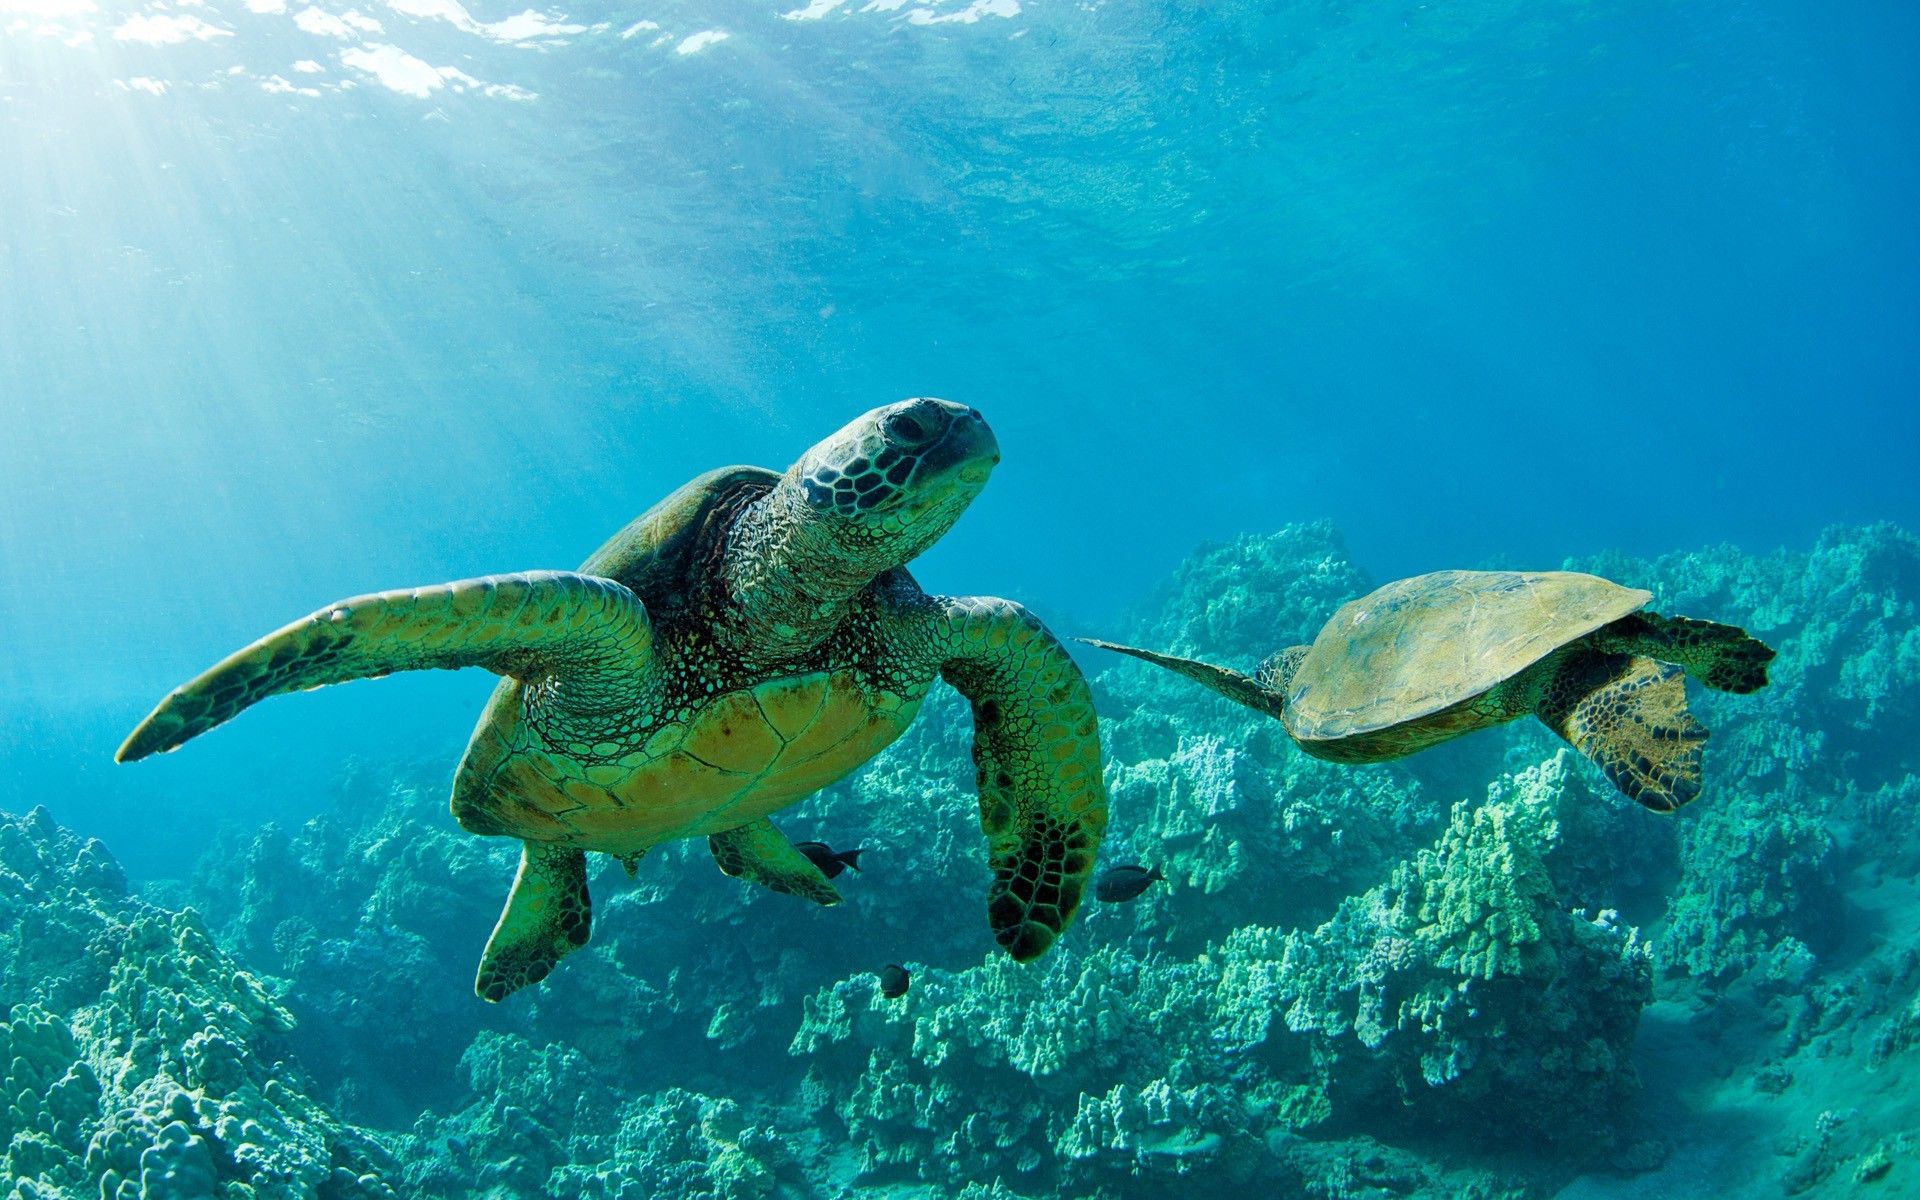 Two sea turtles swimming in the ocean - Turtle